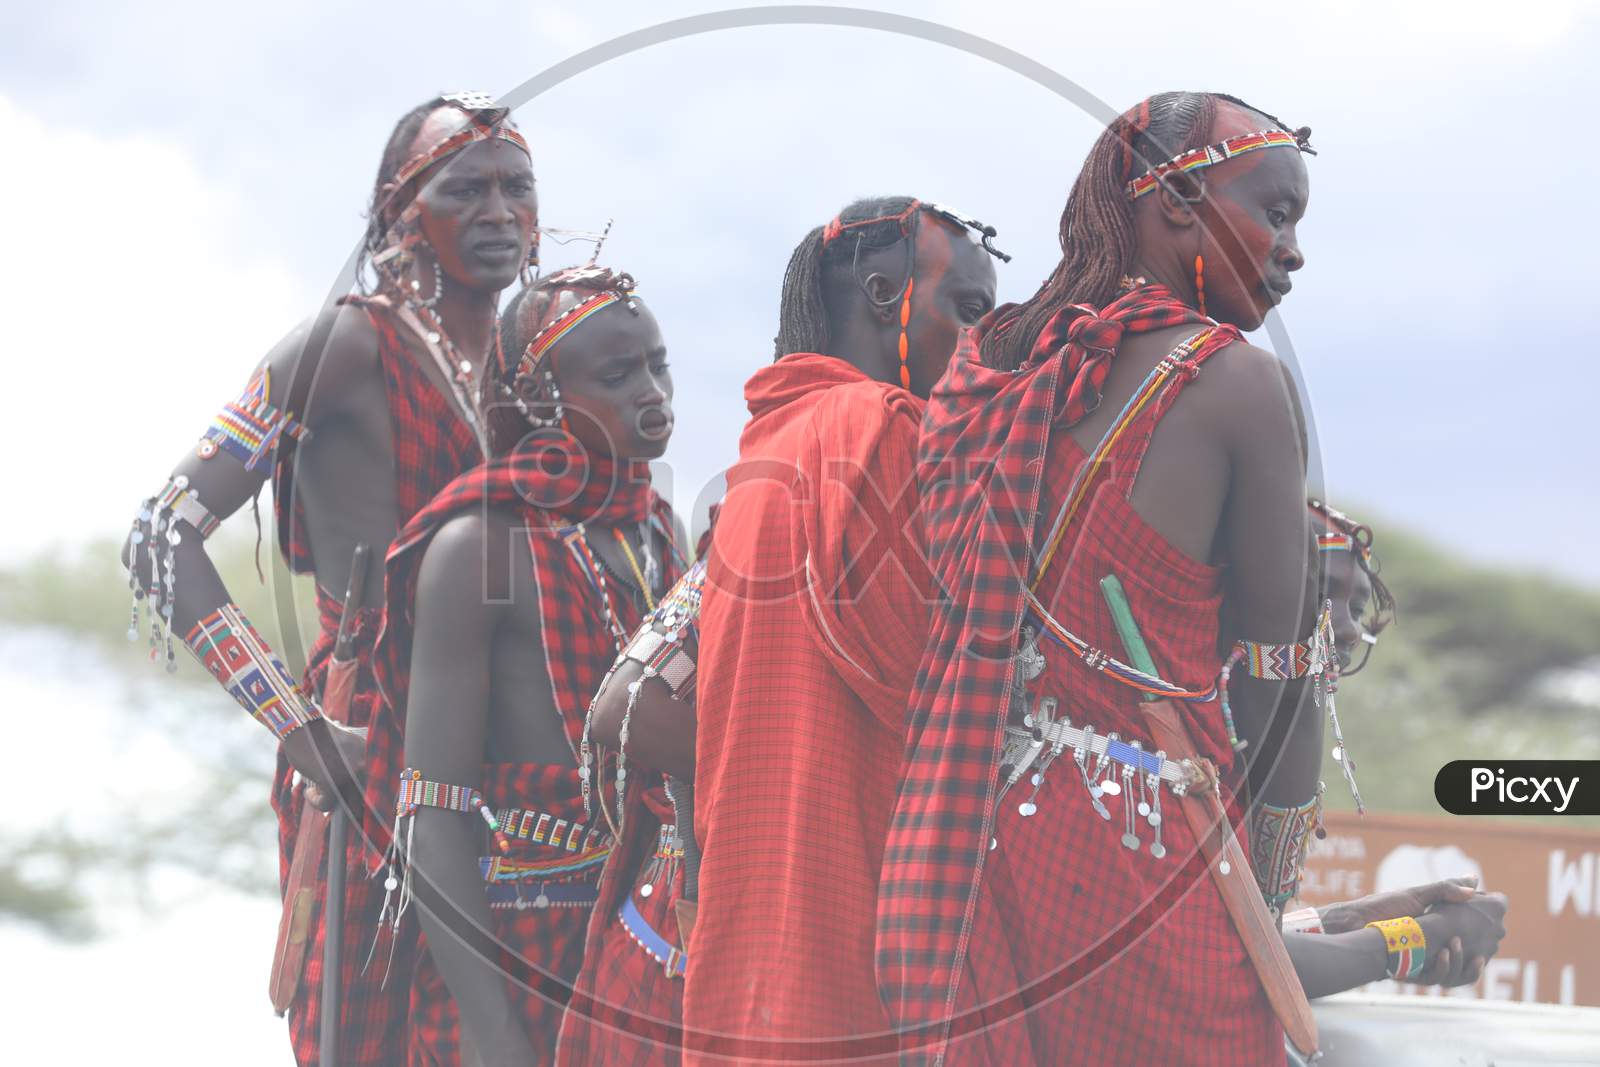 Group of Rural men of Kenya